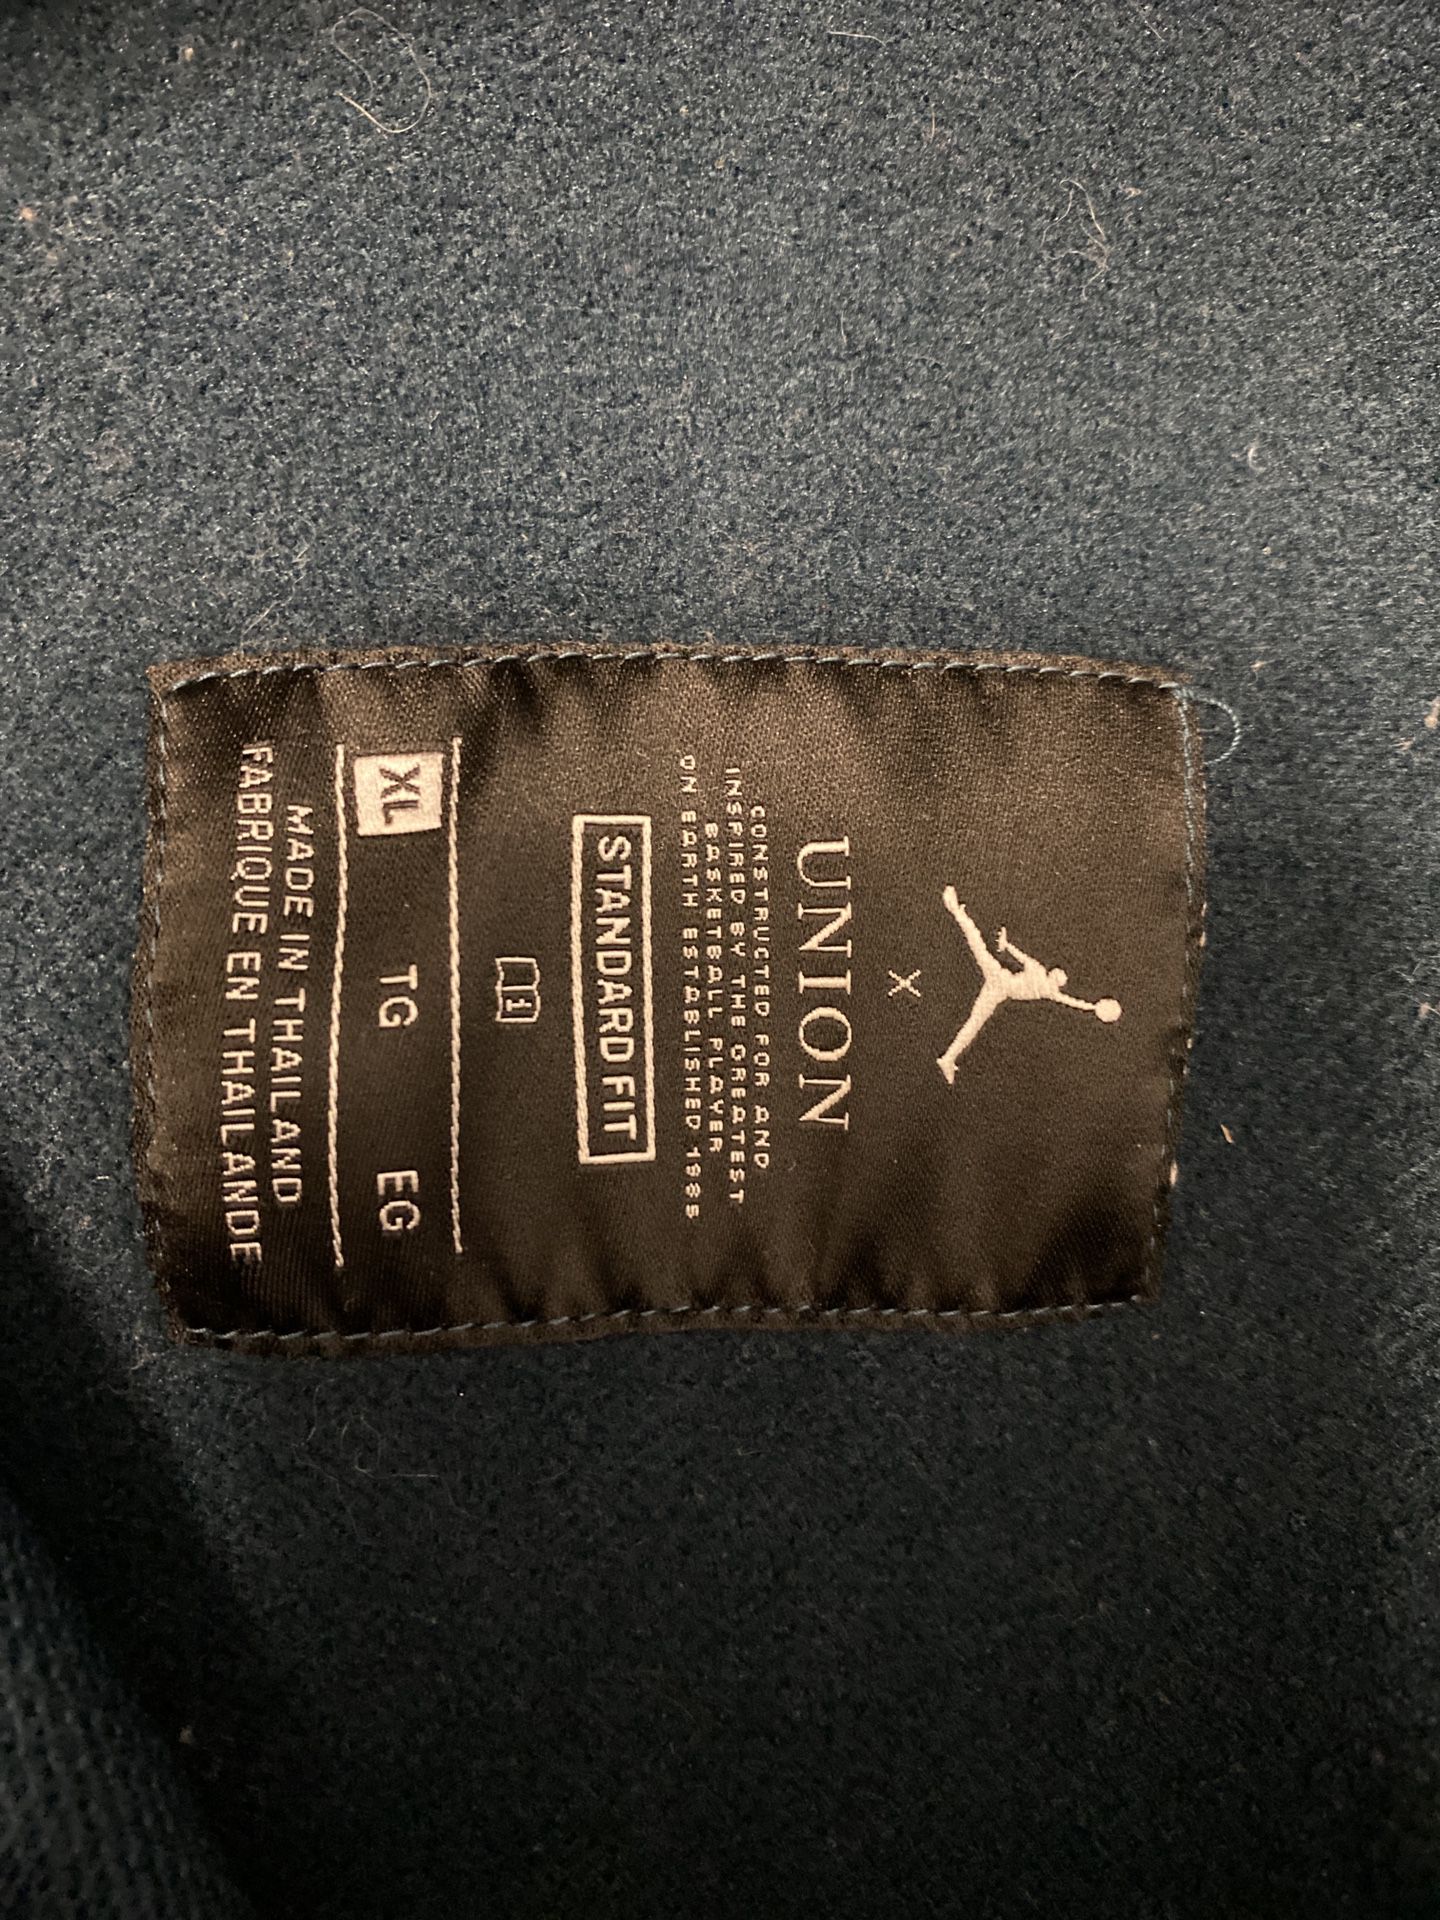 Union La X Air Jordan Nike Coaches Jacket Size XL for Sale in